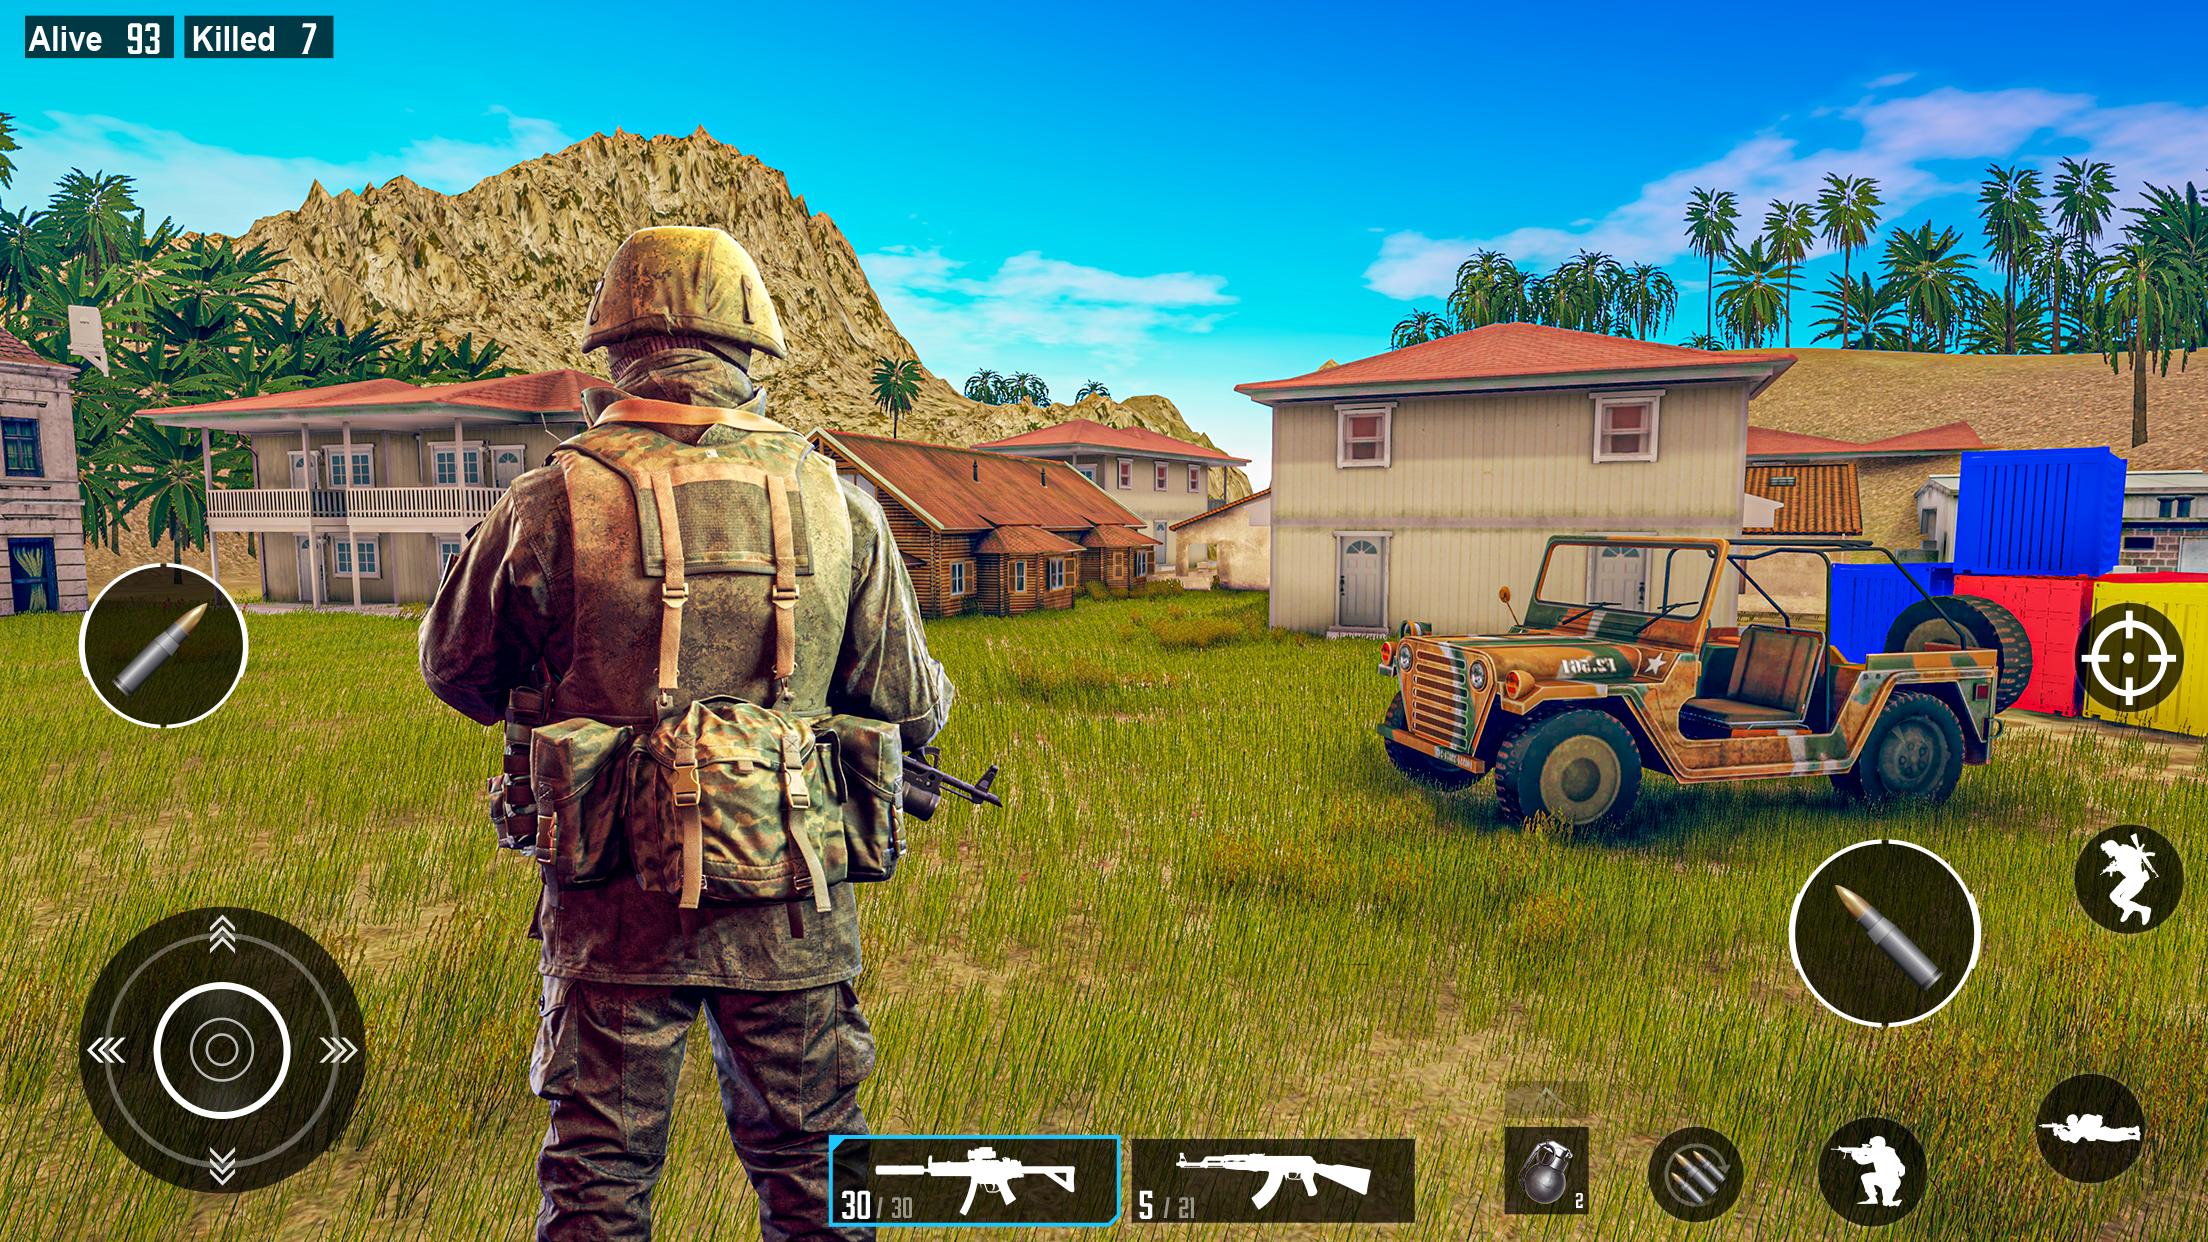 Real Commando Mission - Free Shooting Games 2020 3.5 Screenshot 1